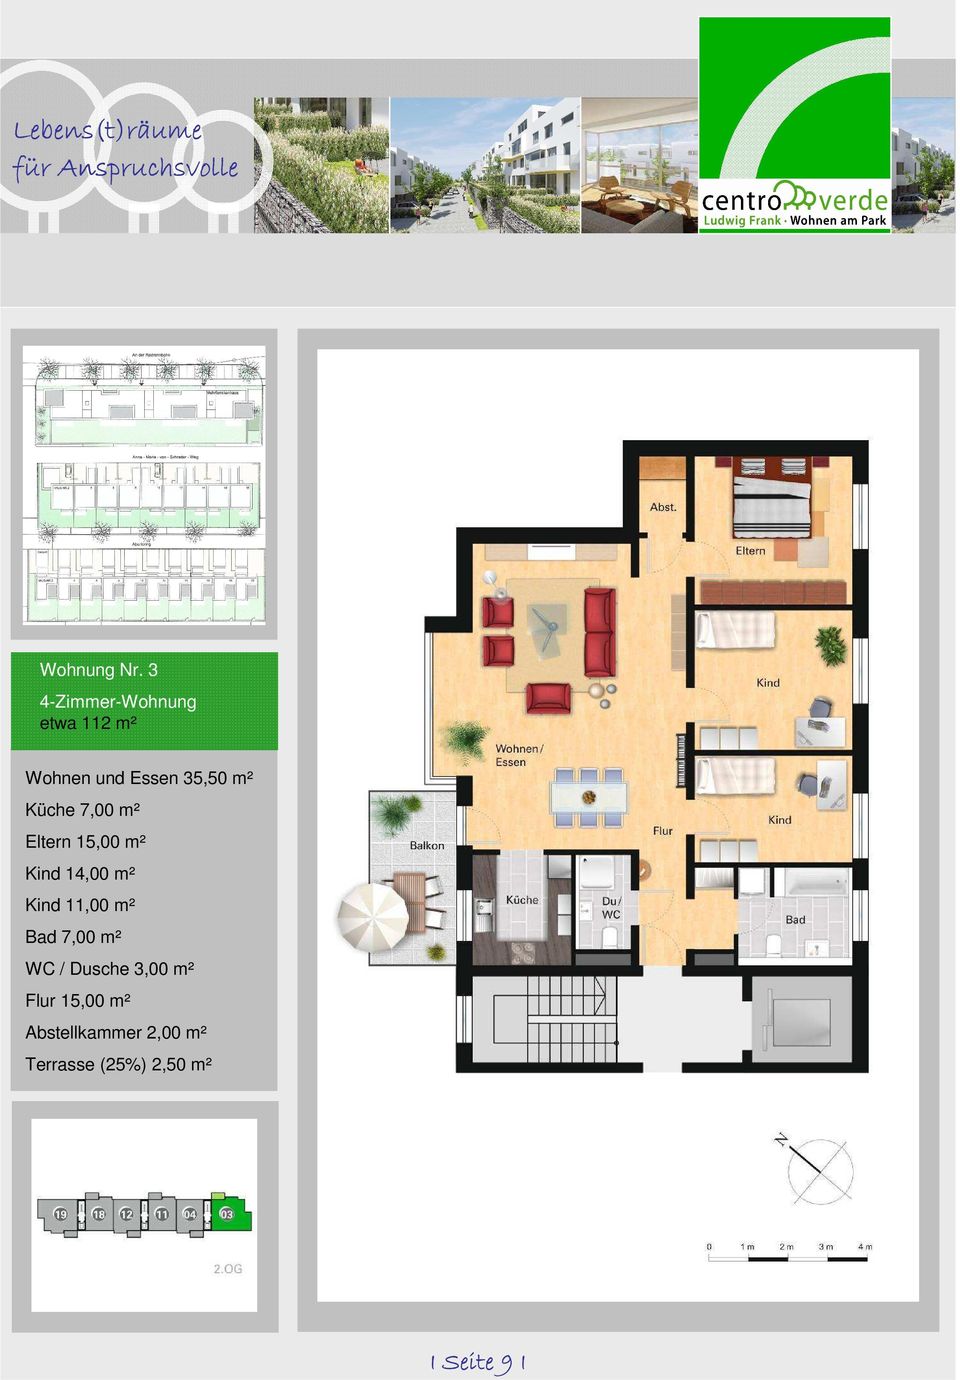 Küche 7,00 m² Eltern 15,00 m² Kind 14,00 m² Kind 11,00 m²